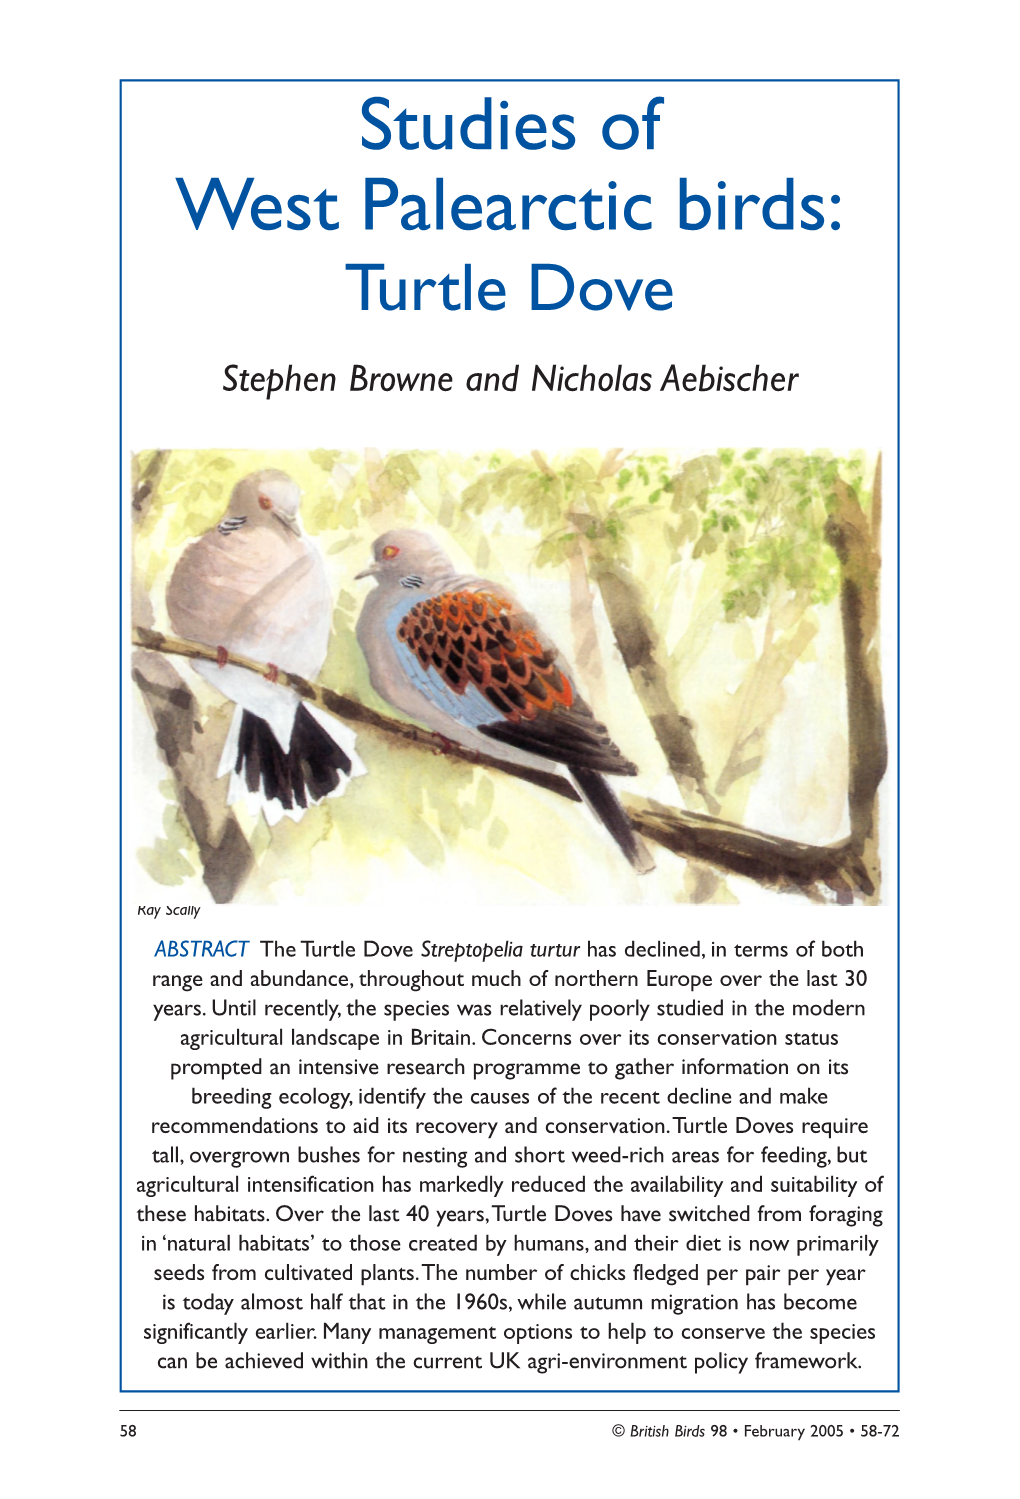 Turtle Dove Stephen Browne and Nicholas Aebischer